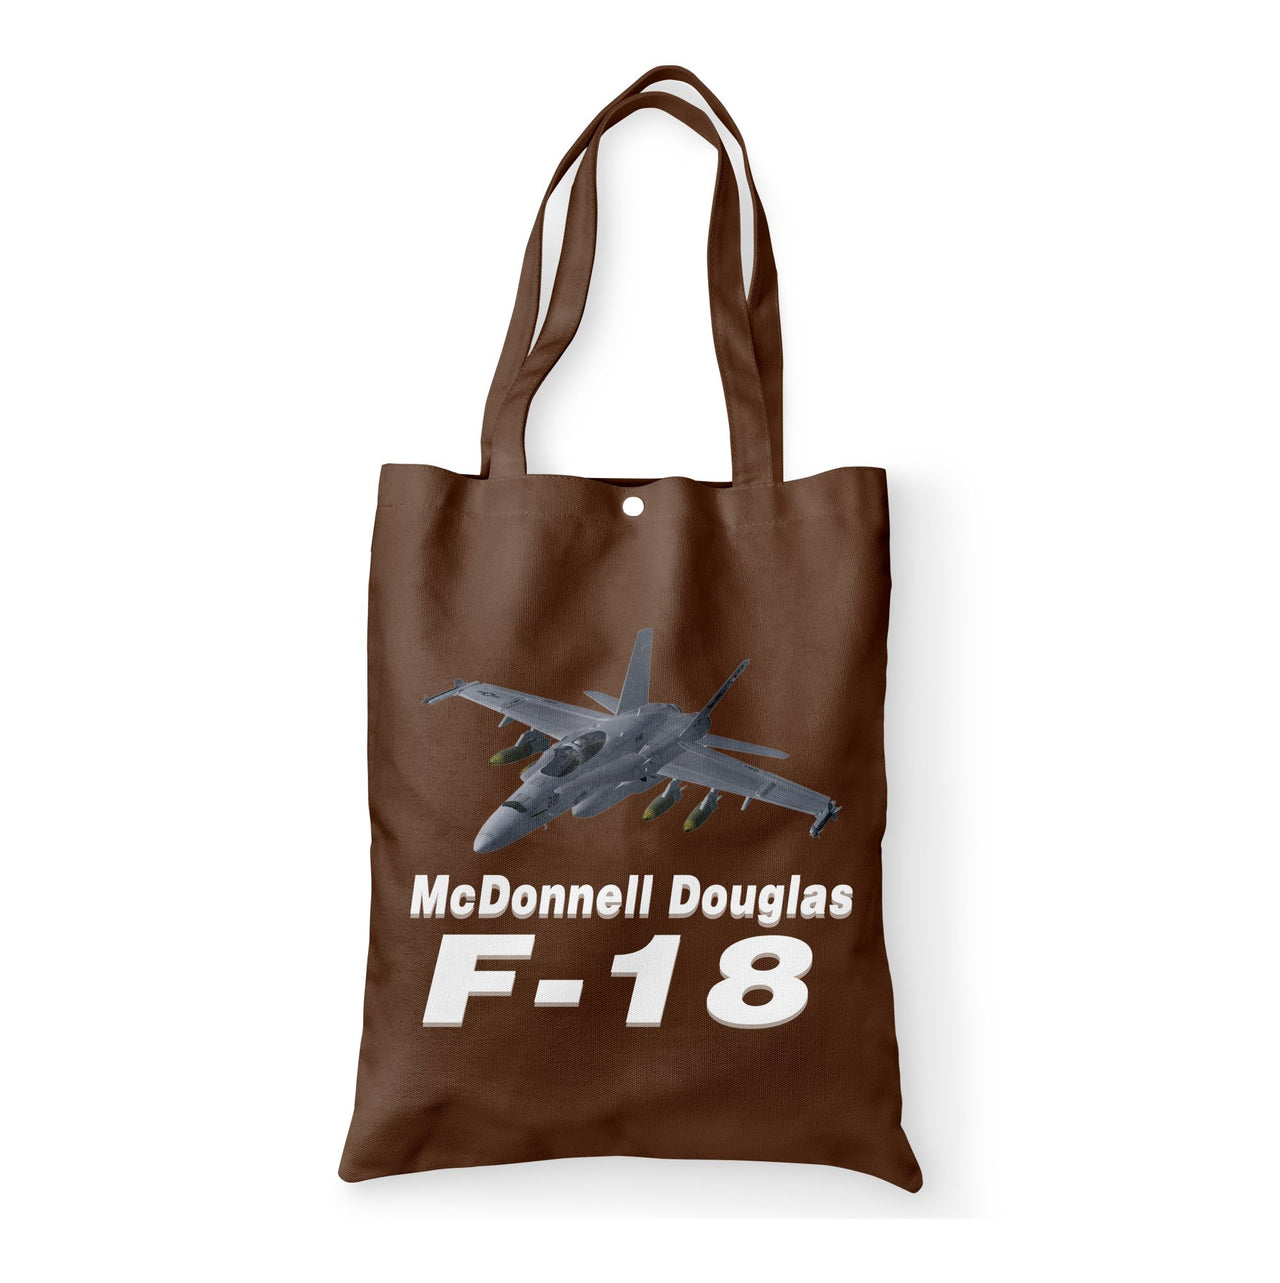 The McDonnell Douglas F18 Designed Tote Bags